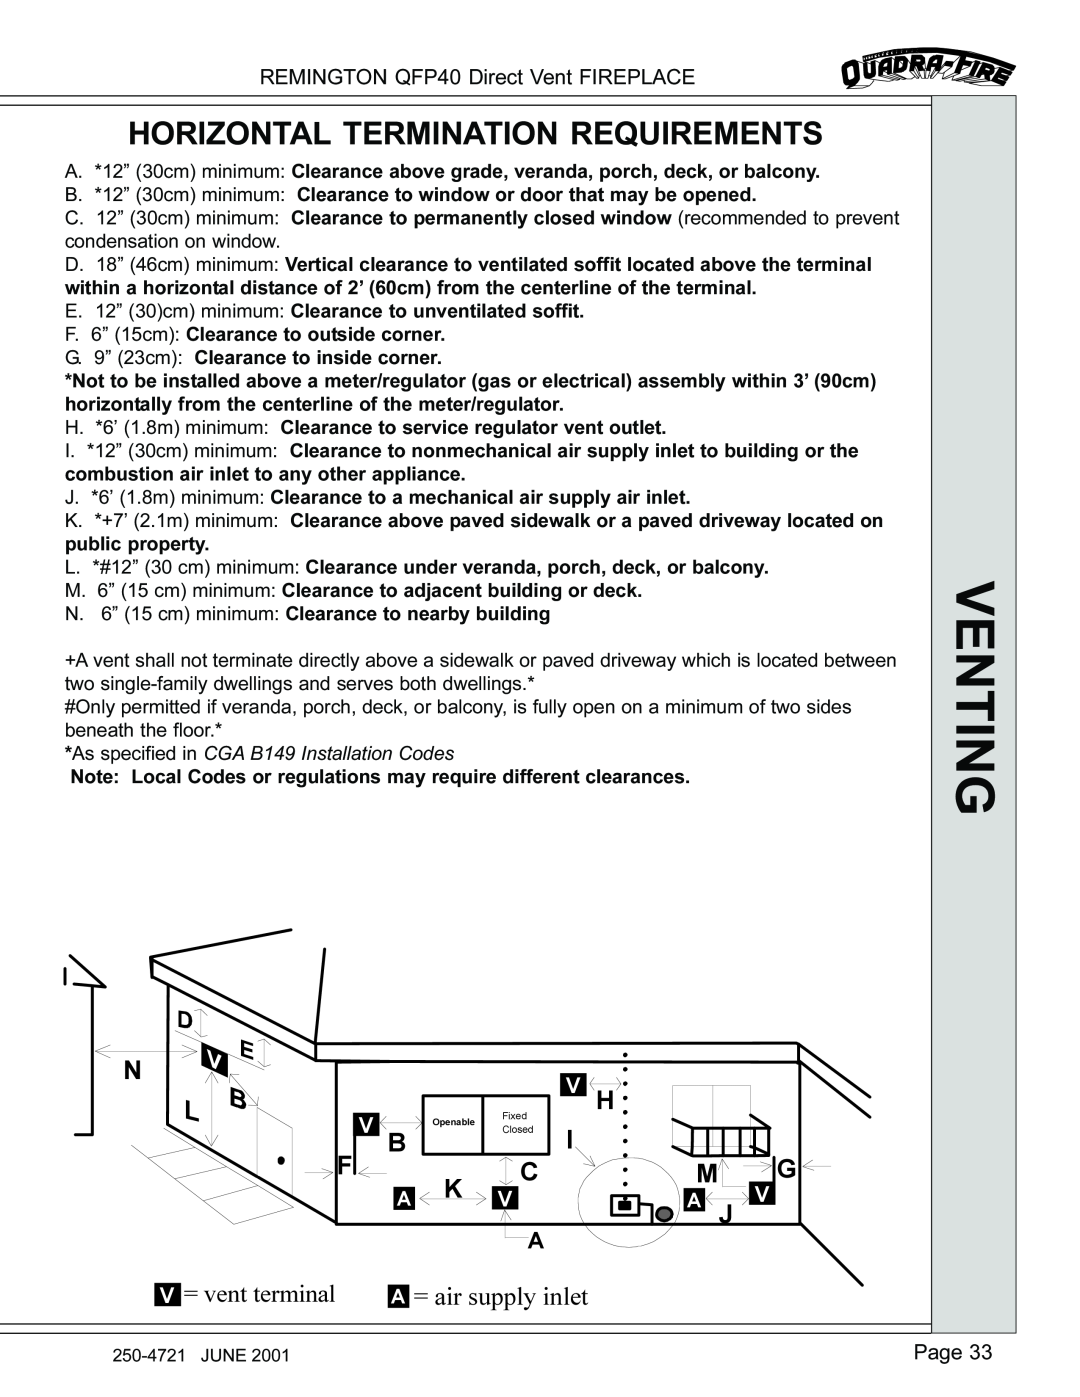 Remington QFP40 manual Horizontal Termination Requirements, Venting, Vh, = vent terminal, = air supply inlet 